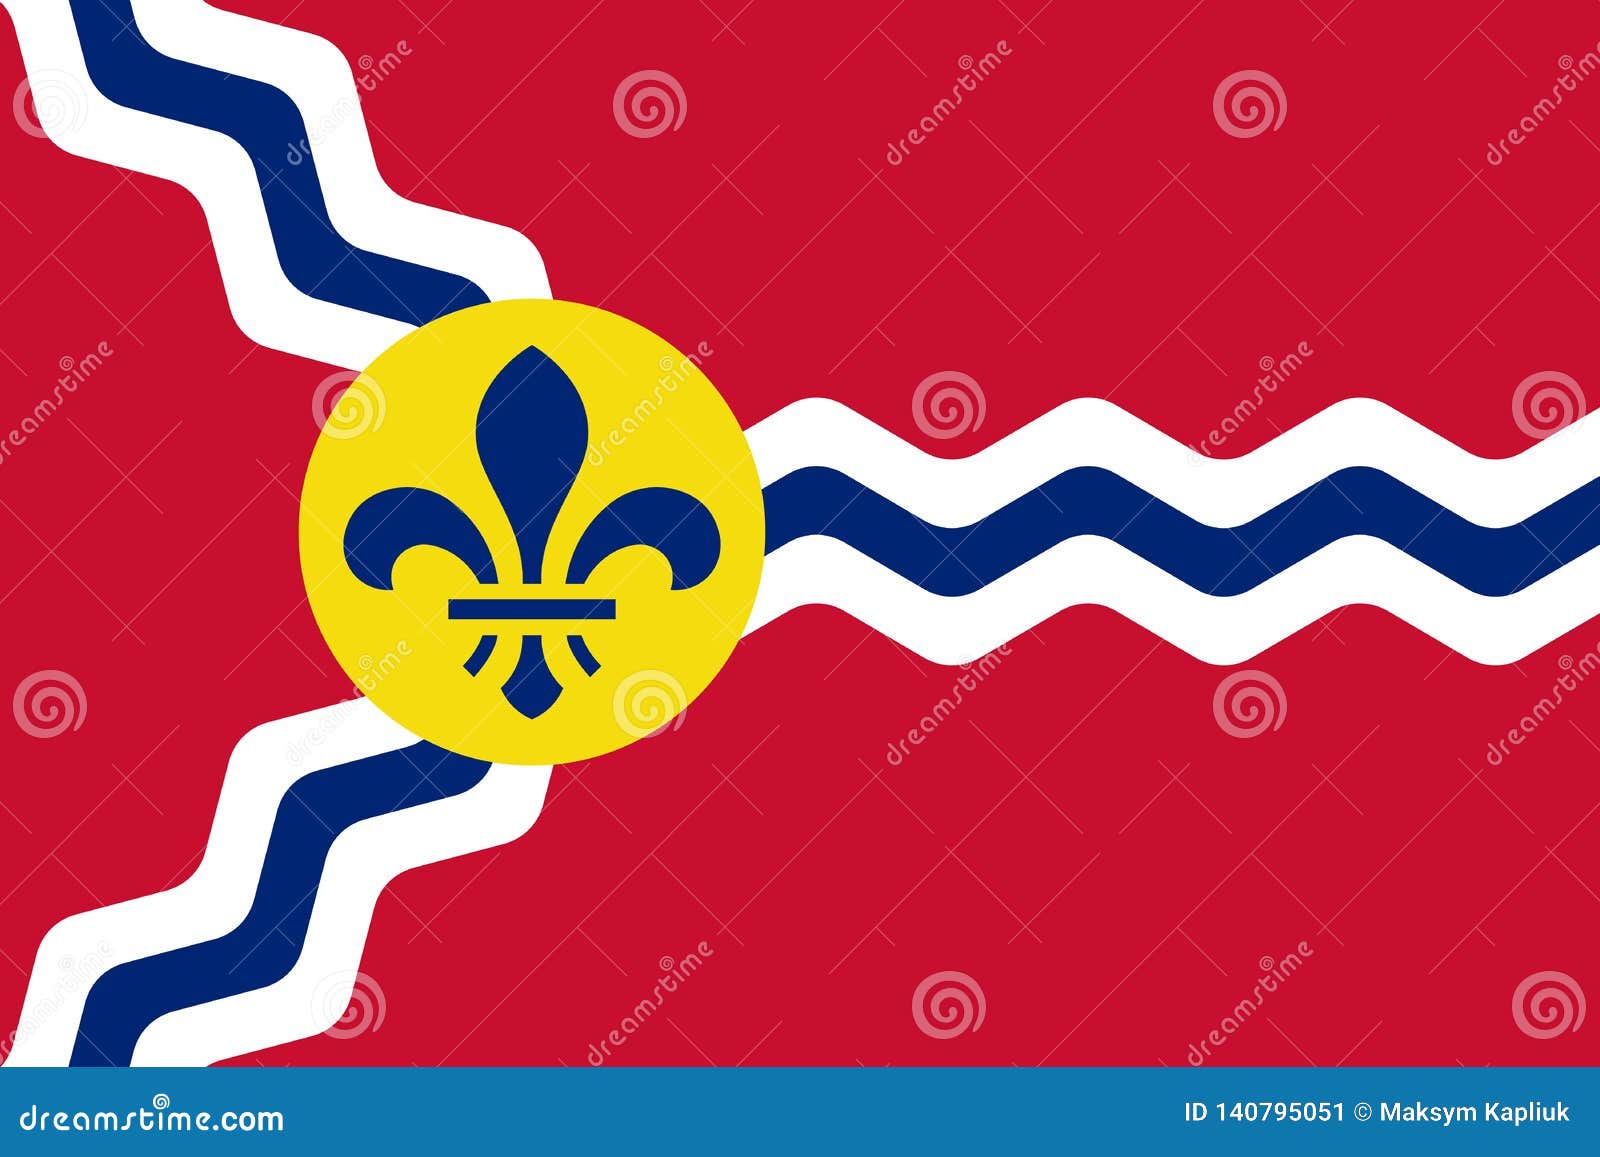 Flag Of Saint Louis State Missouri. United States Of America Stock Vector - Illustration of ...